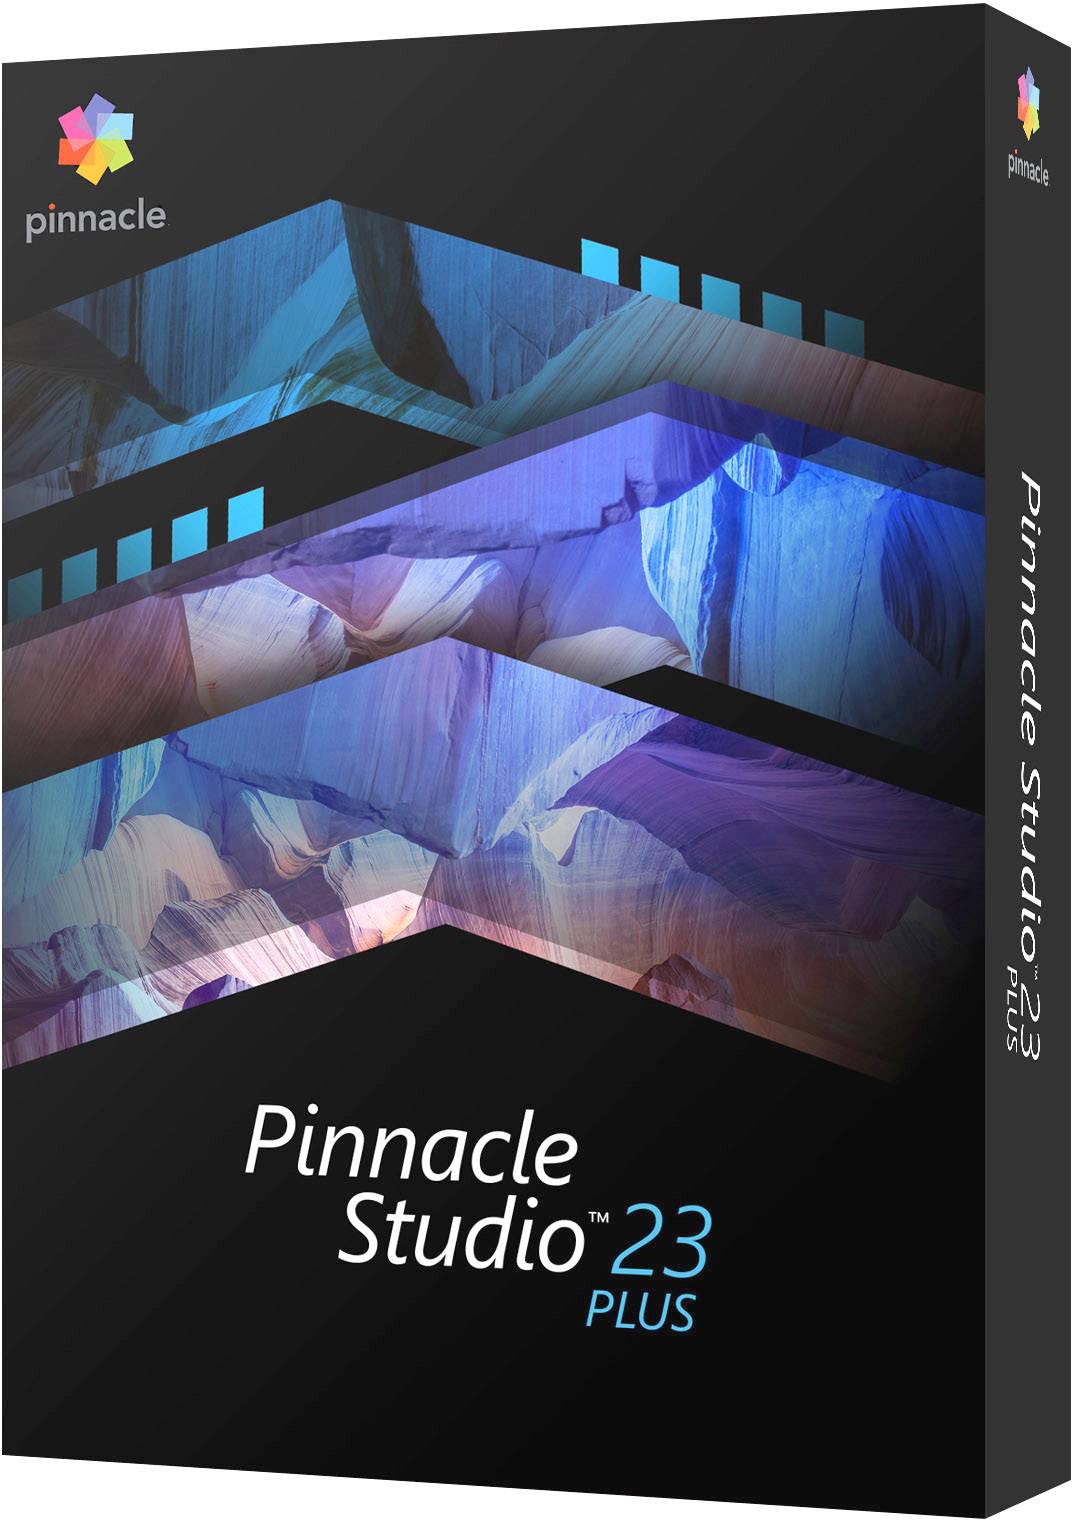 chroma key in pinnacle studio 23 ultimate